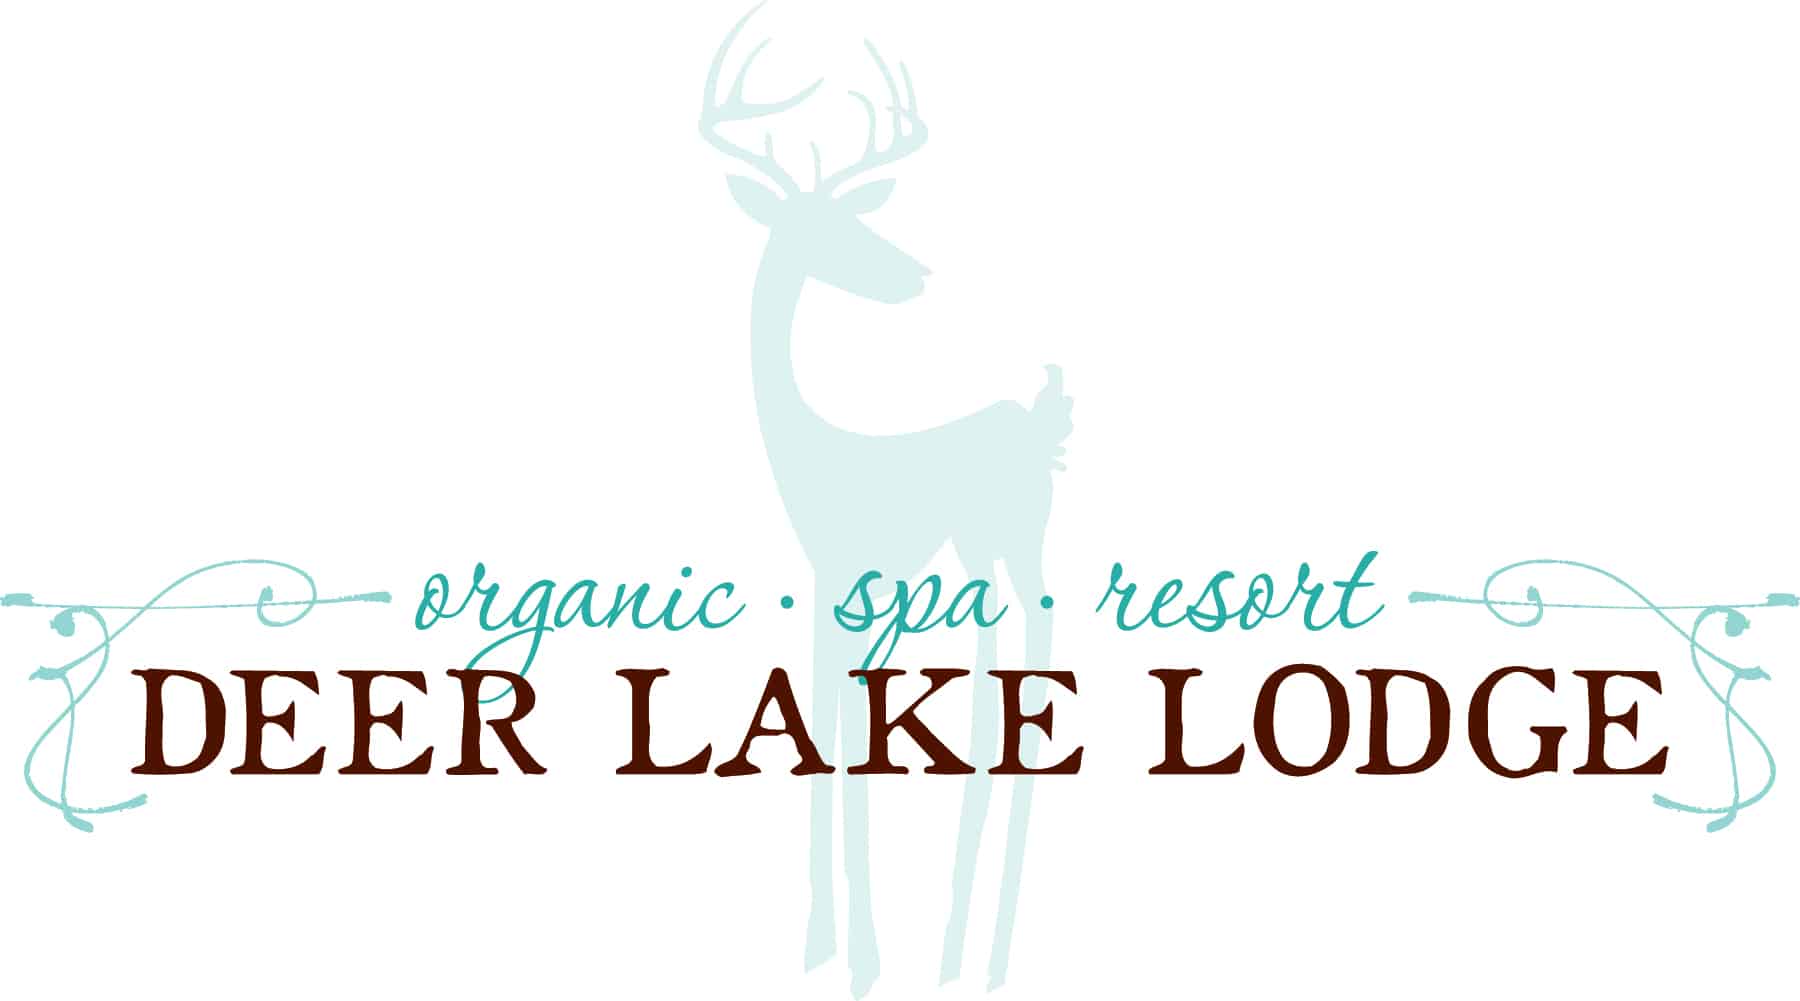 Deer Lake Lodge & Spa - Goodtaste with Tanji